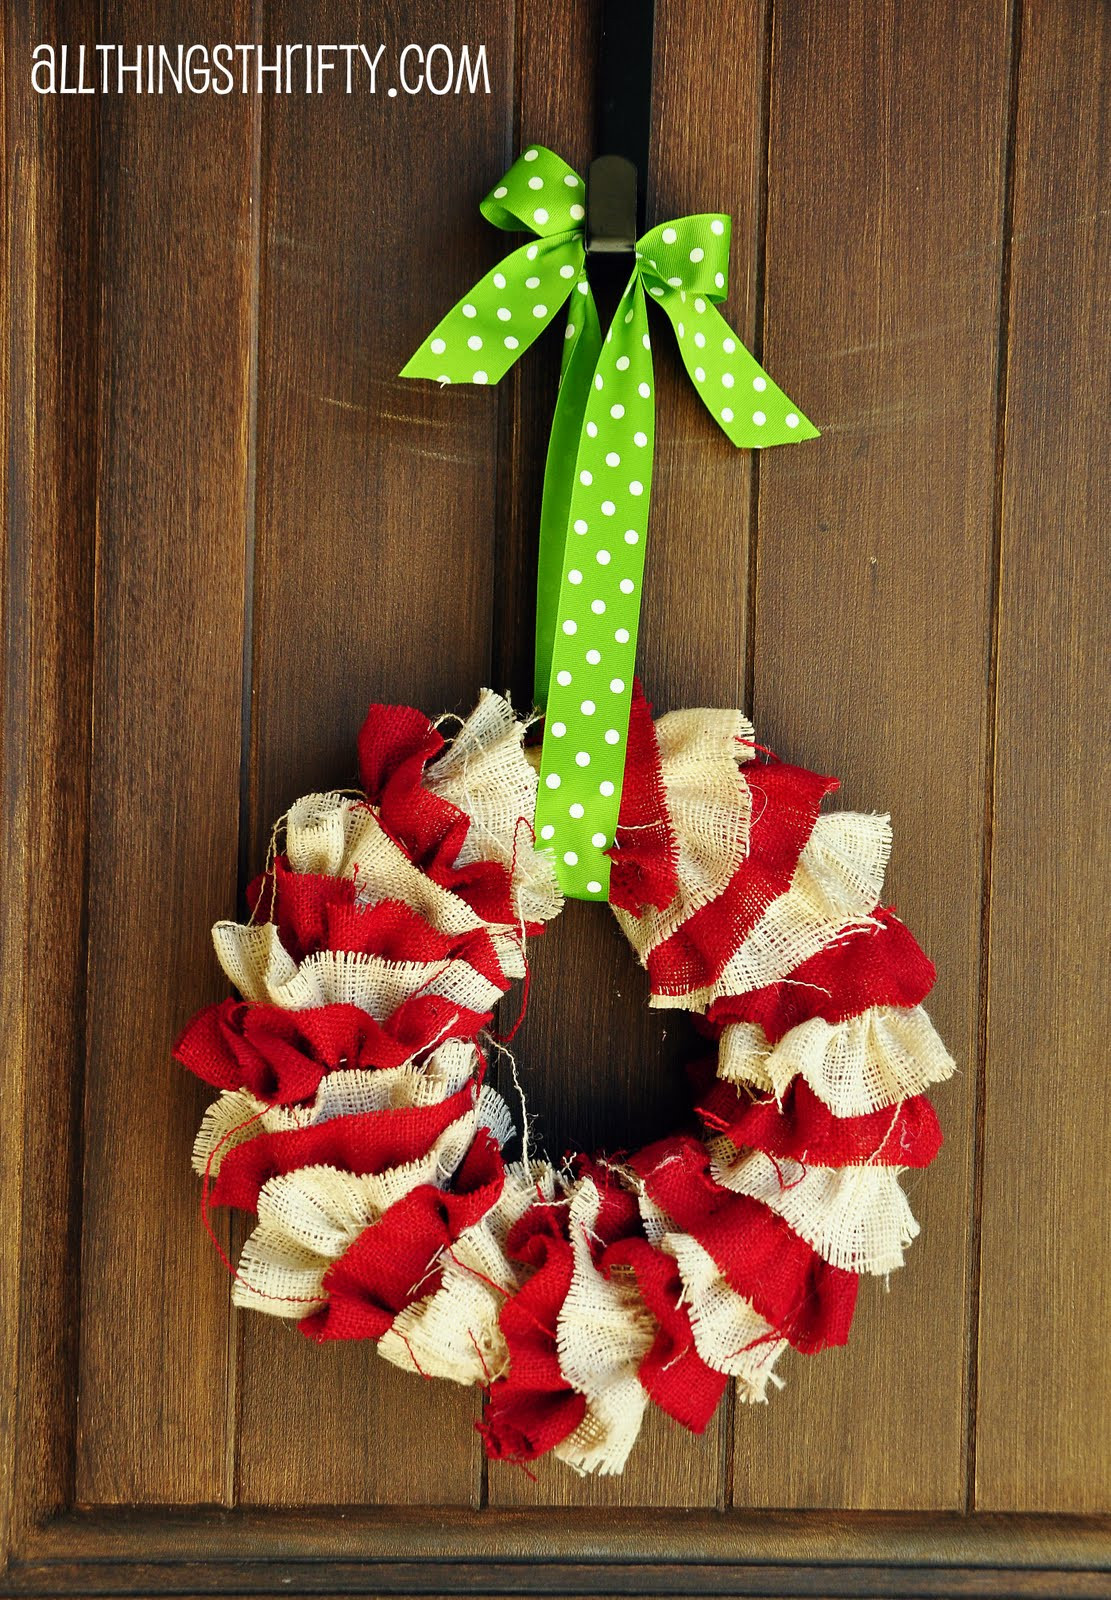 Best ideas about DIY Christmas Wreath
. Save or Pin Tutorial DIY Christmas Wreath Now.